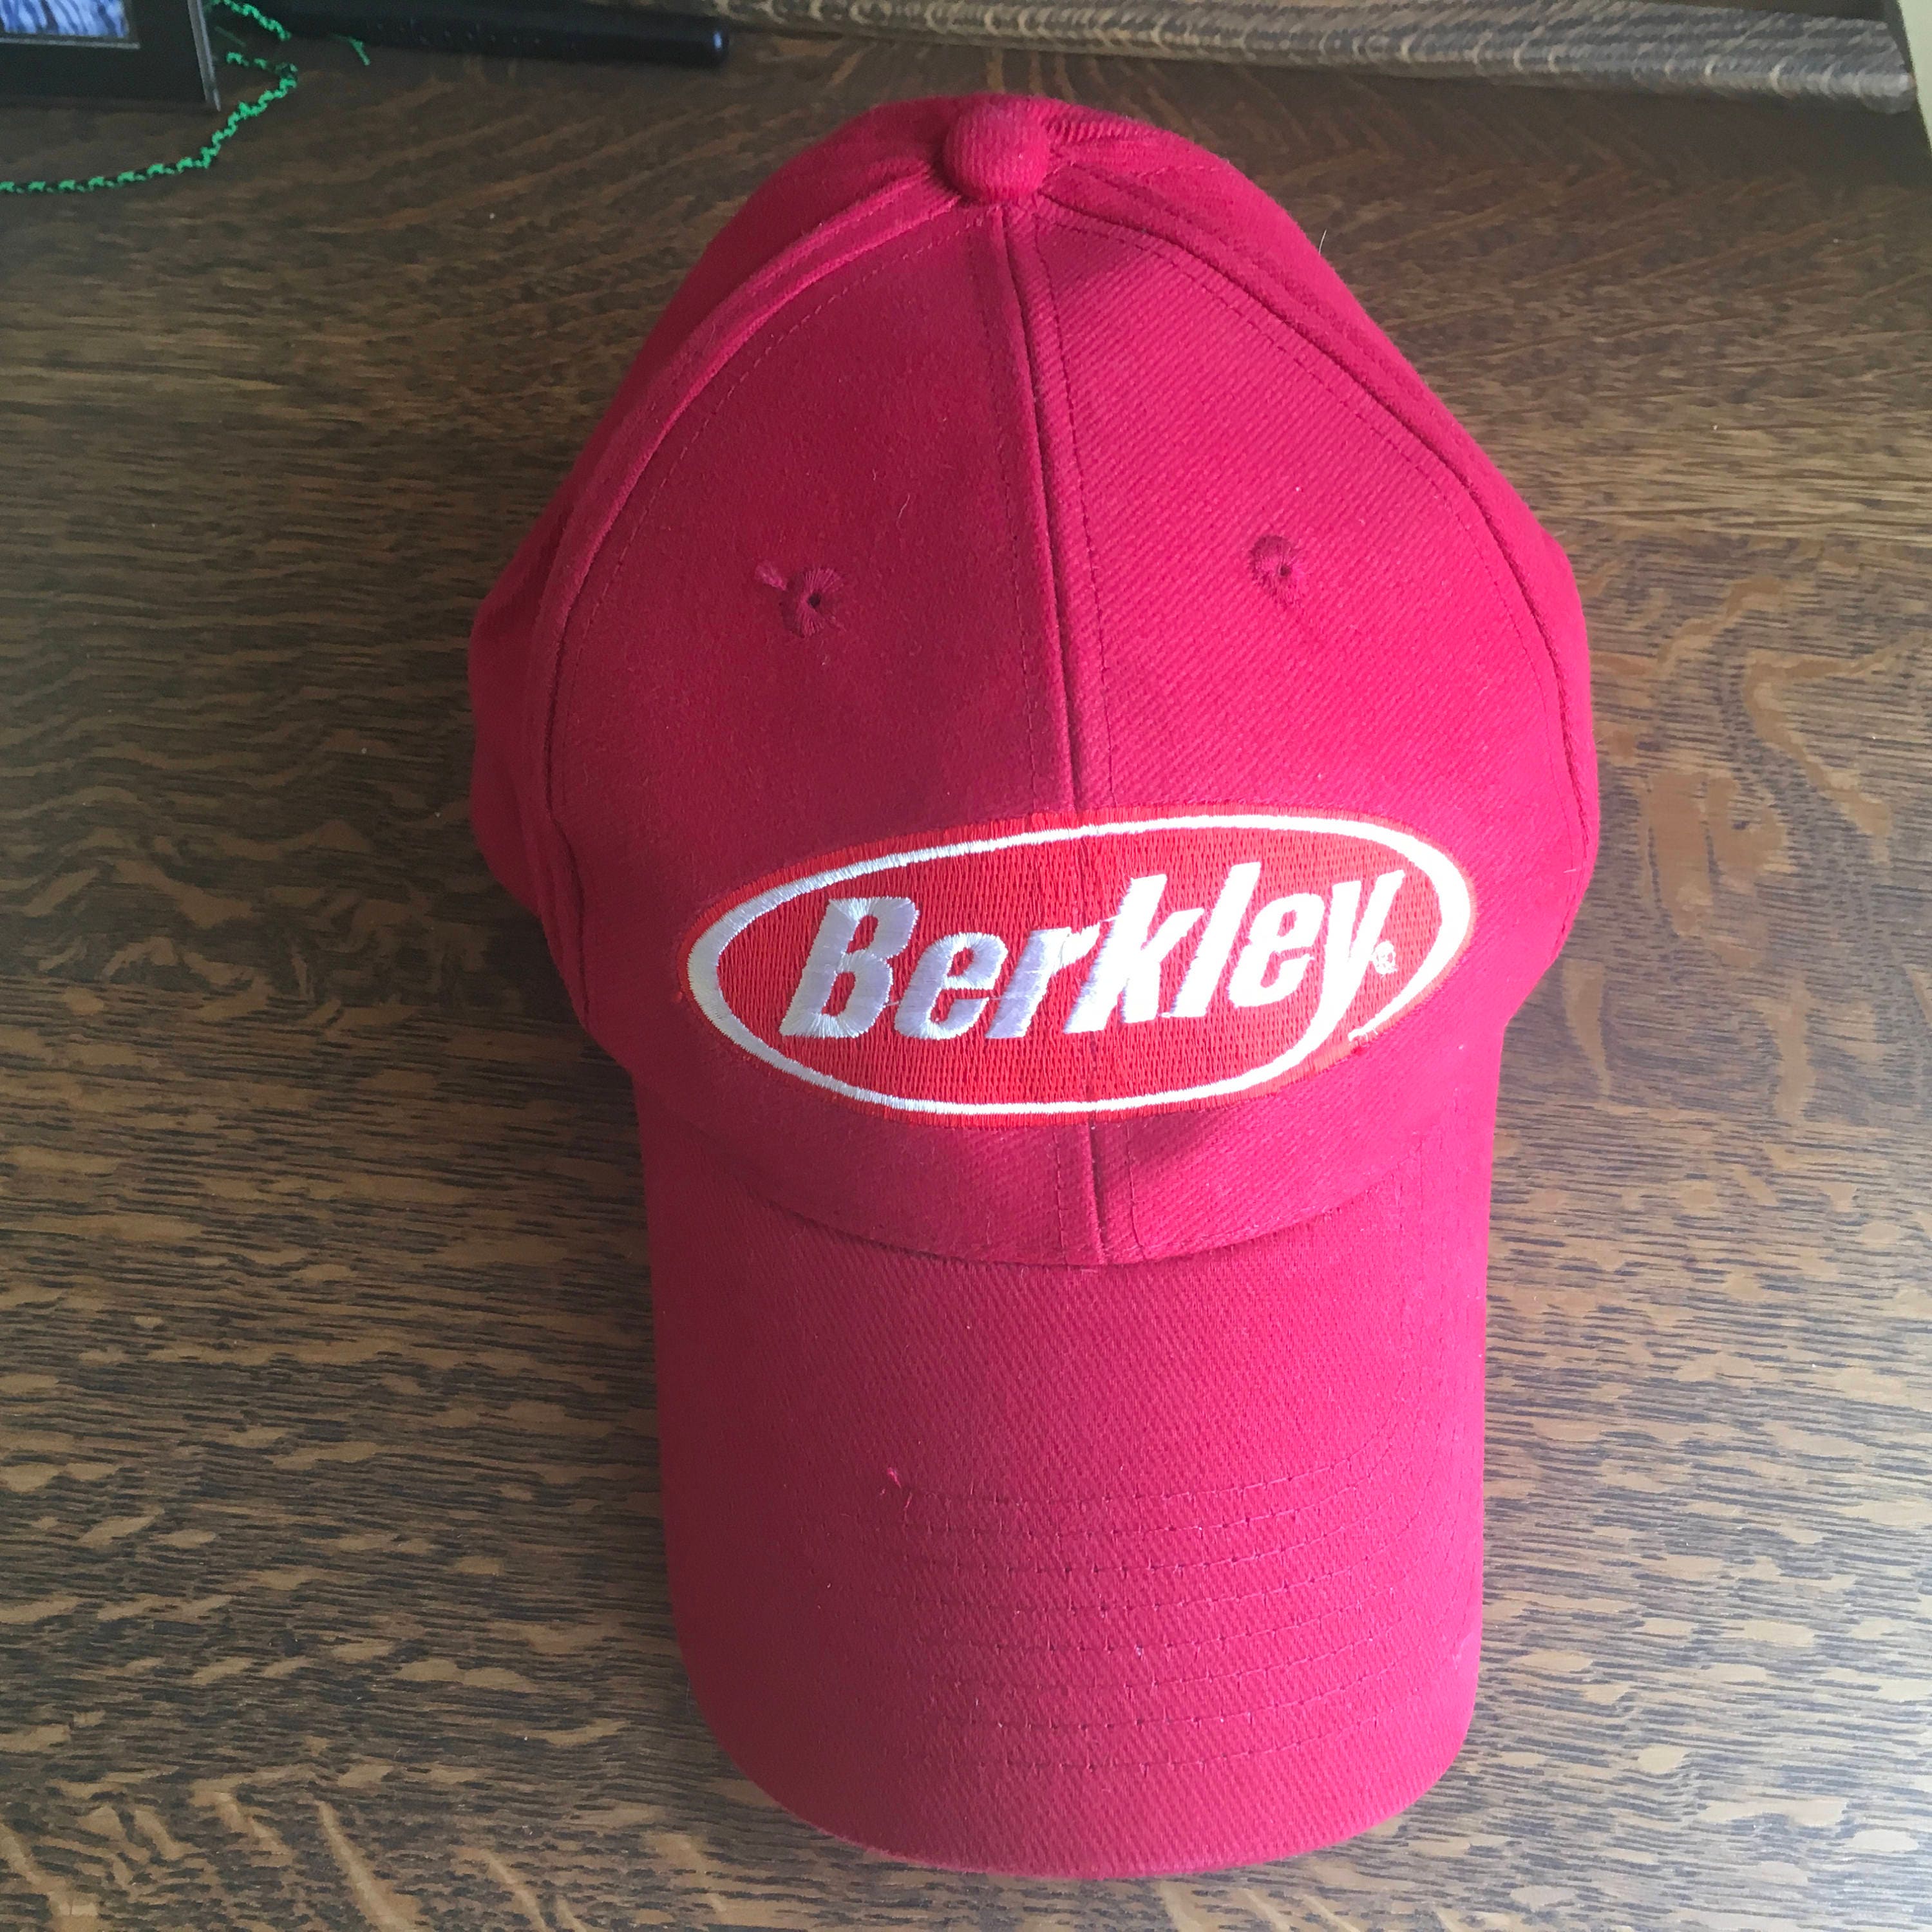 Berkley Retro Fishing Hat Vintage Trucker Baseball Red Cap Advertisement 